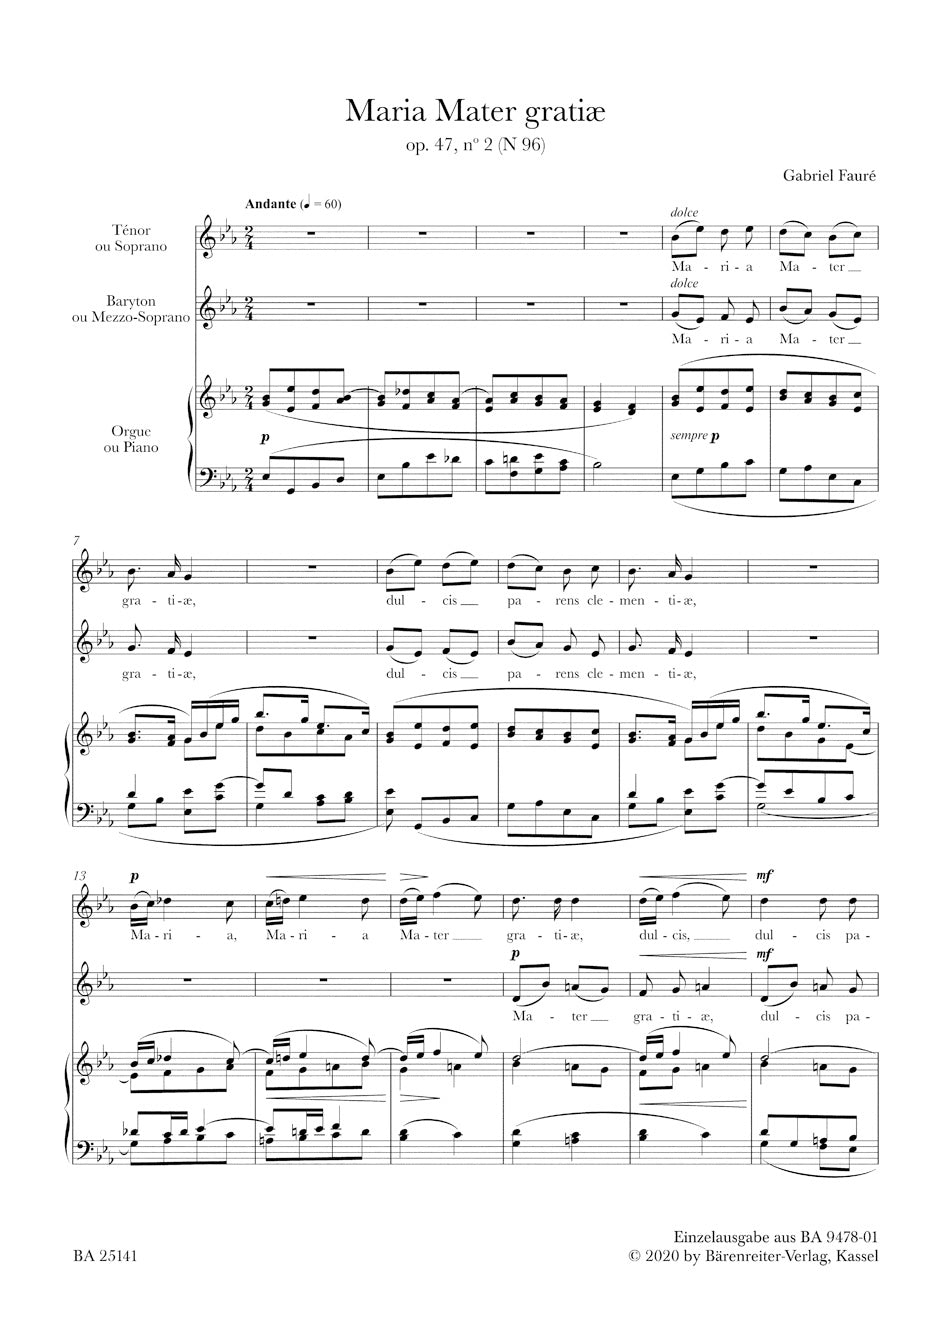 Dvorak Requiem Chorus Practice 13 (Tenor) 